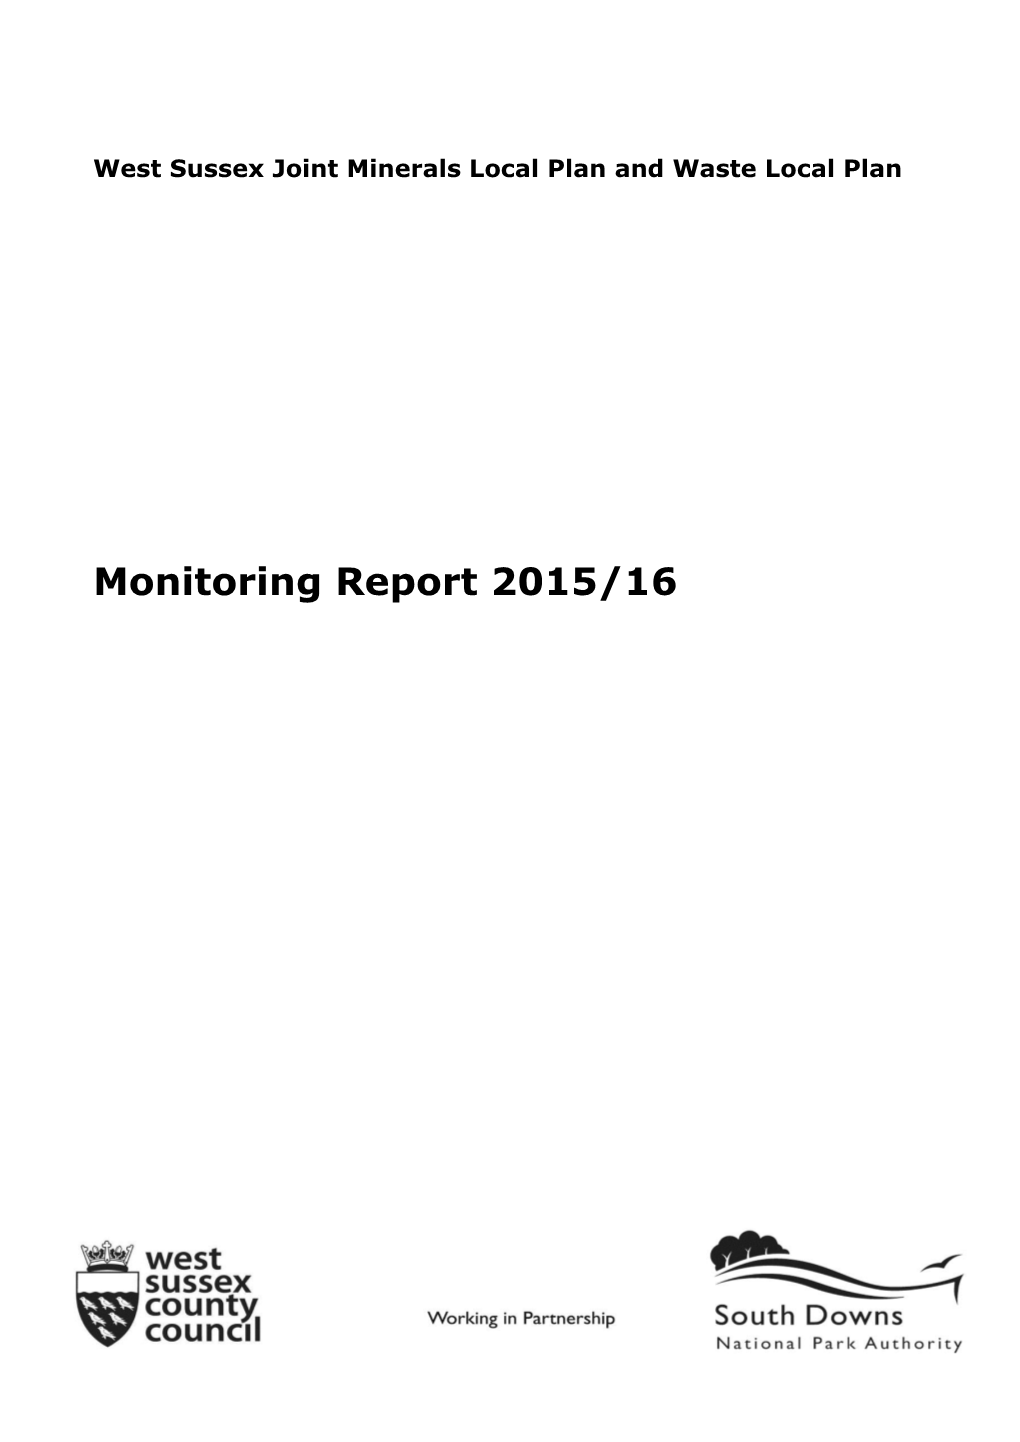 Monitoring Report 2015/16